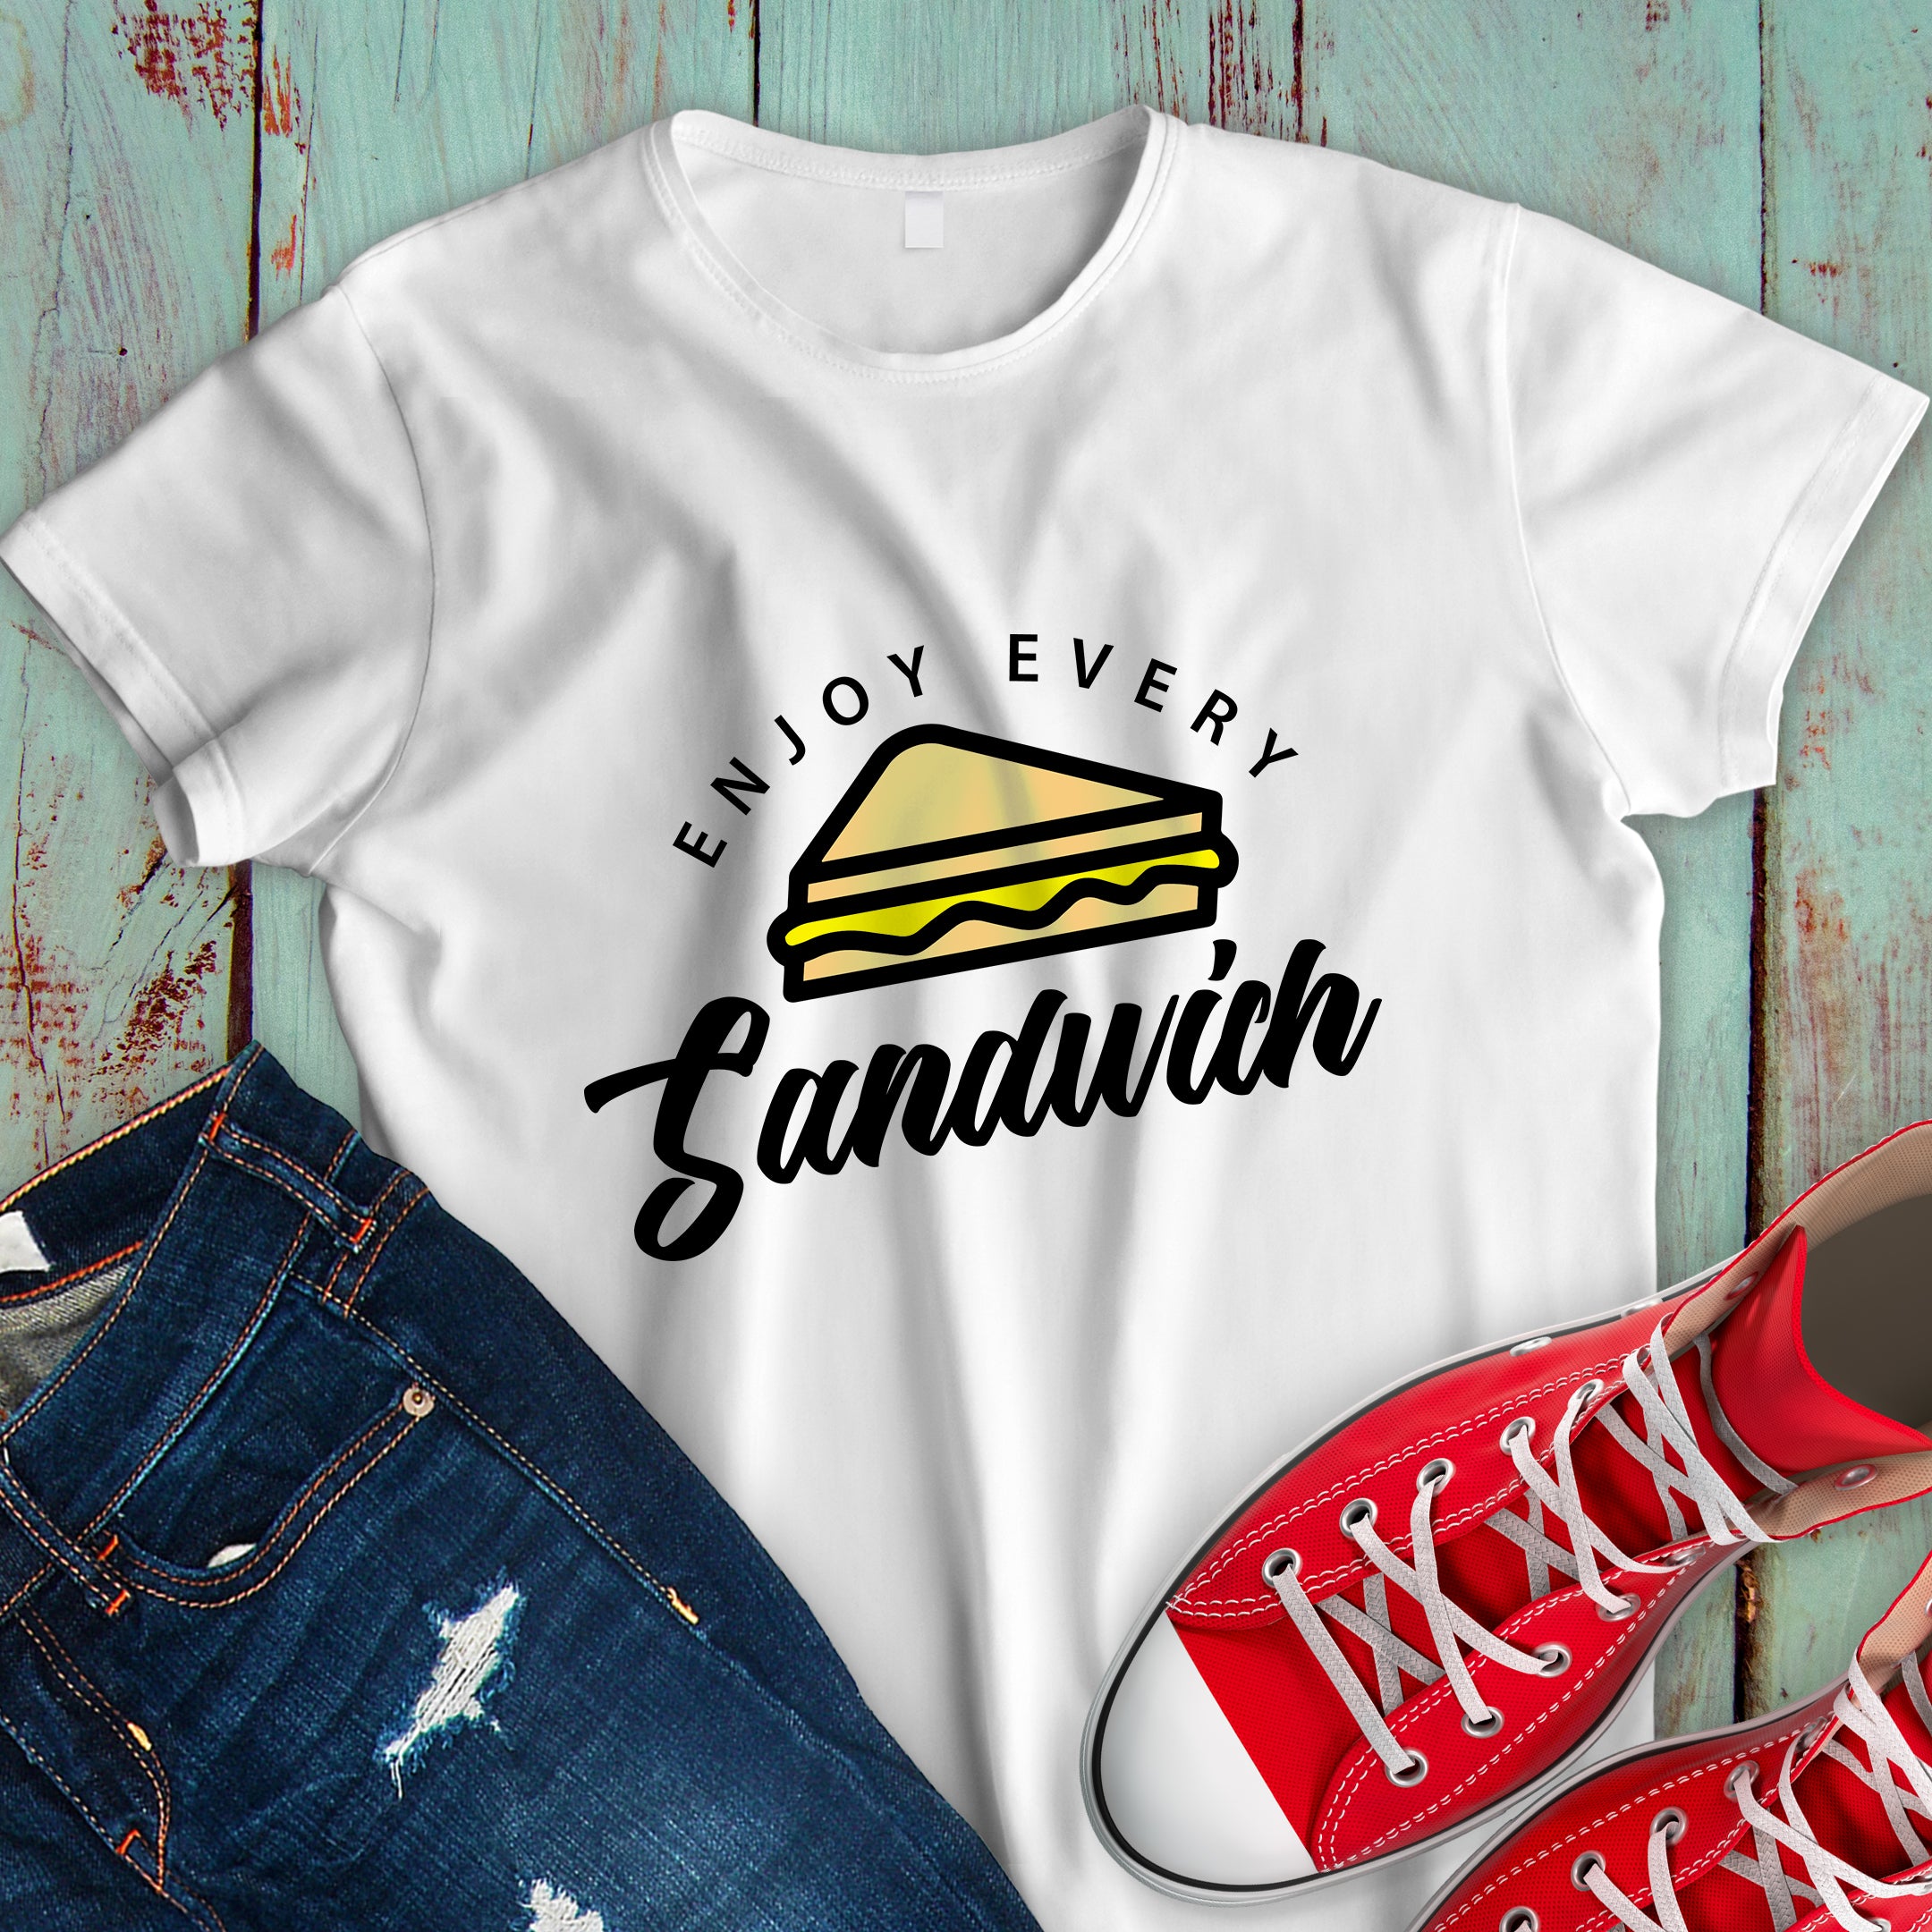 Enjoy Every Sandwich